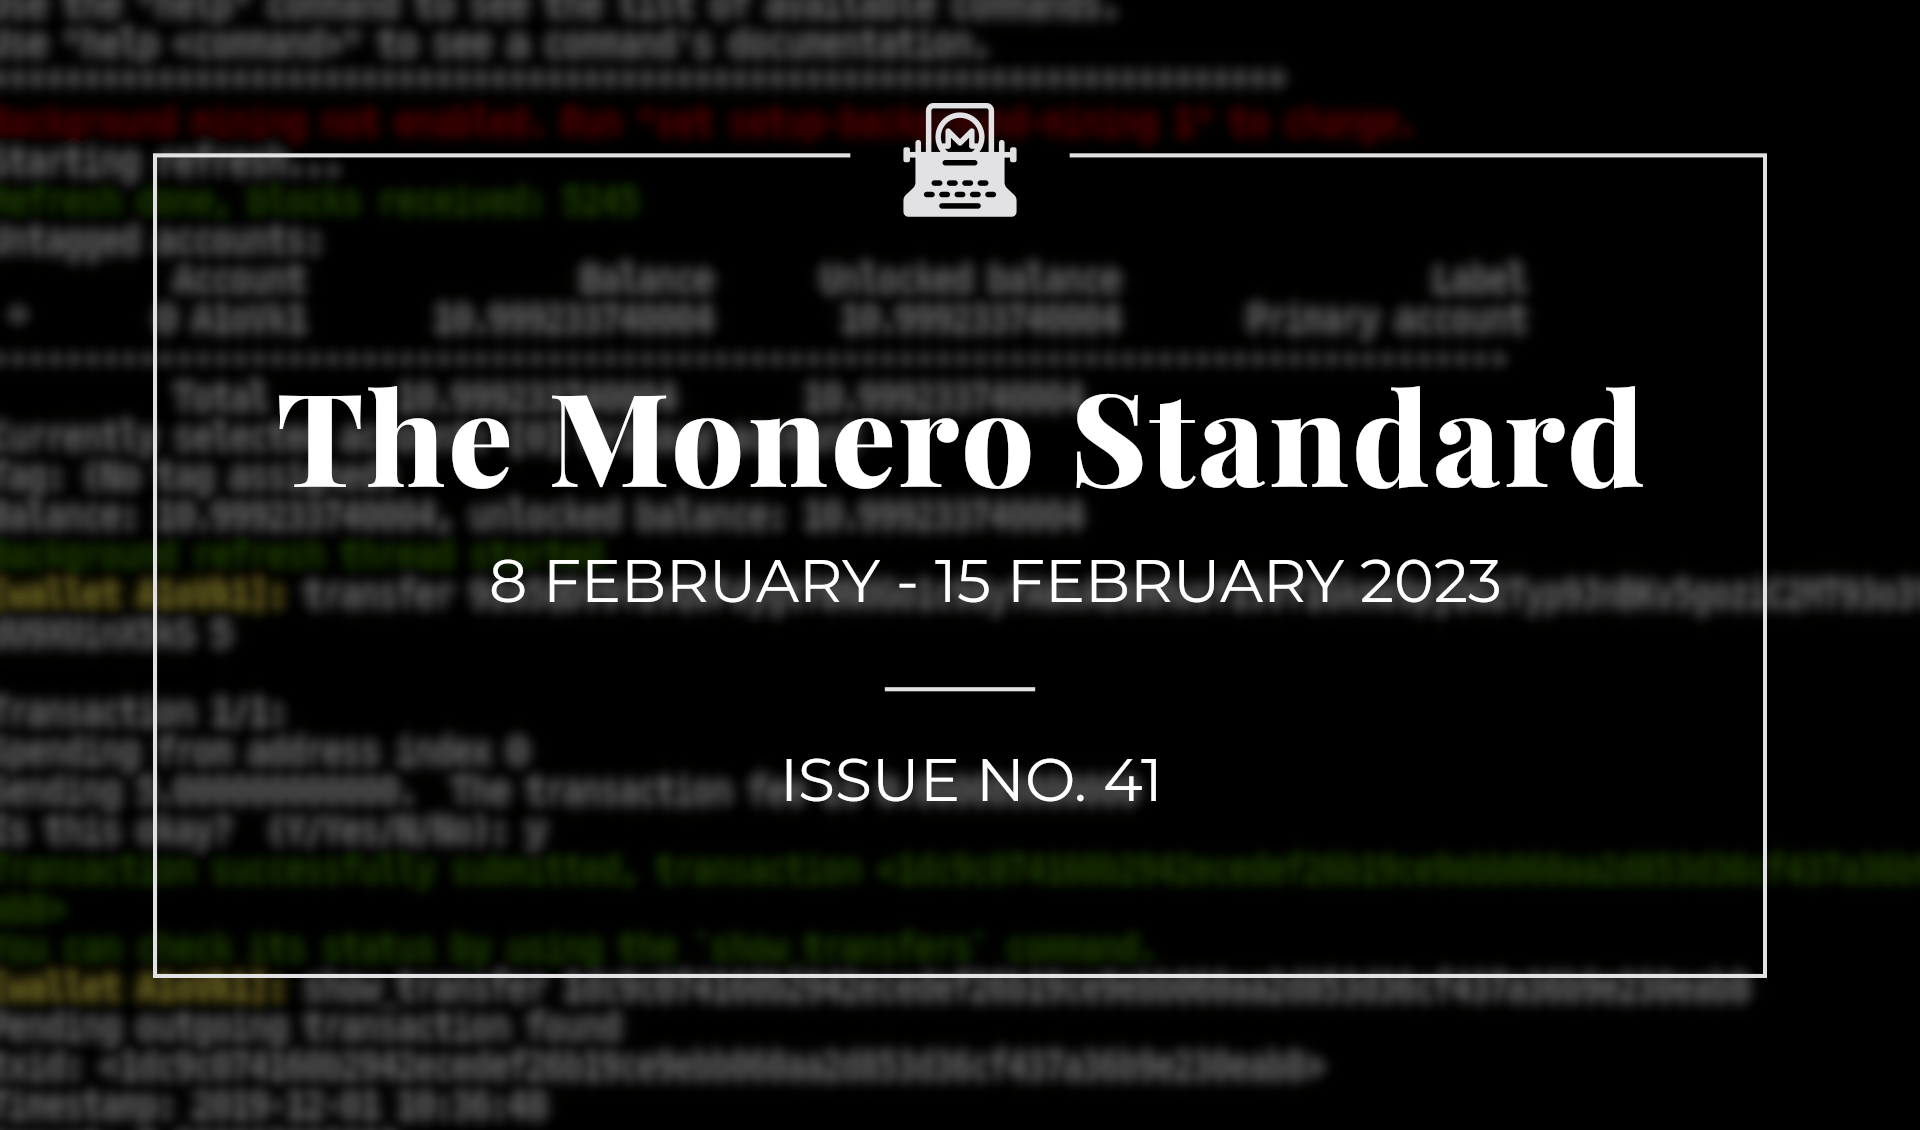 The Monero Standard #41: 8 February 2023 - 15 February 2023